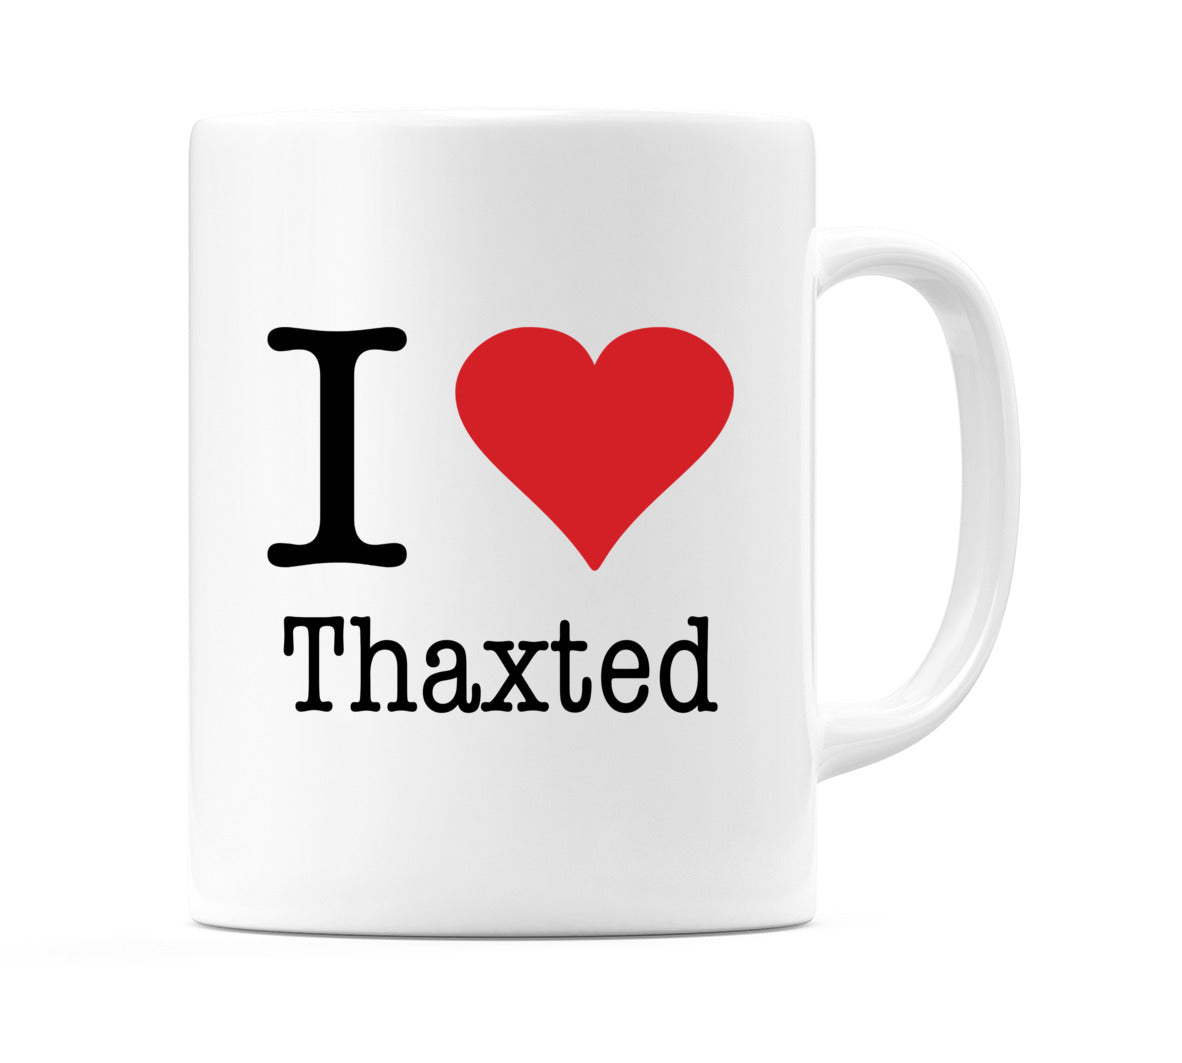 I Love Thaxted Mug